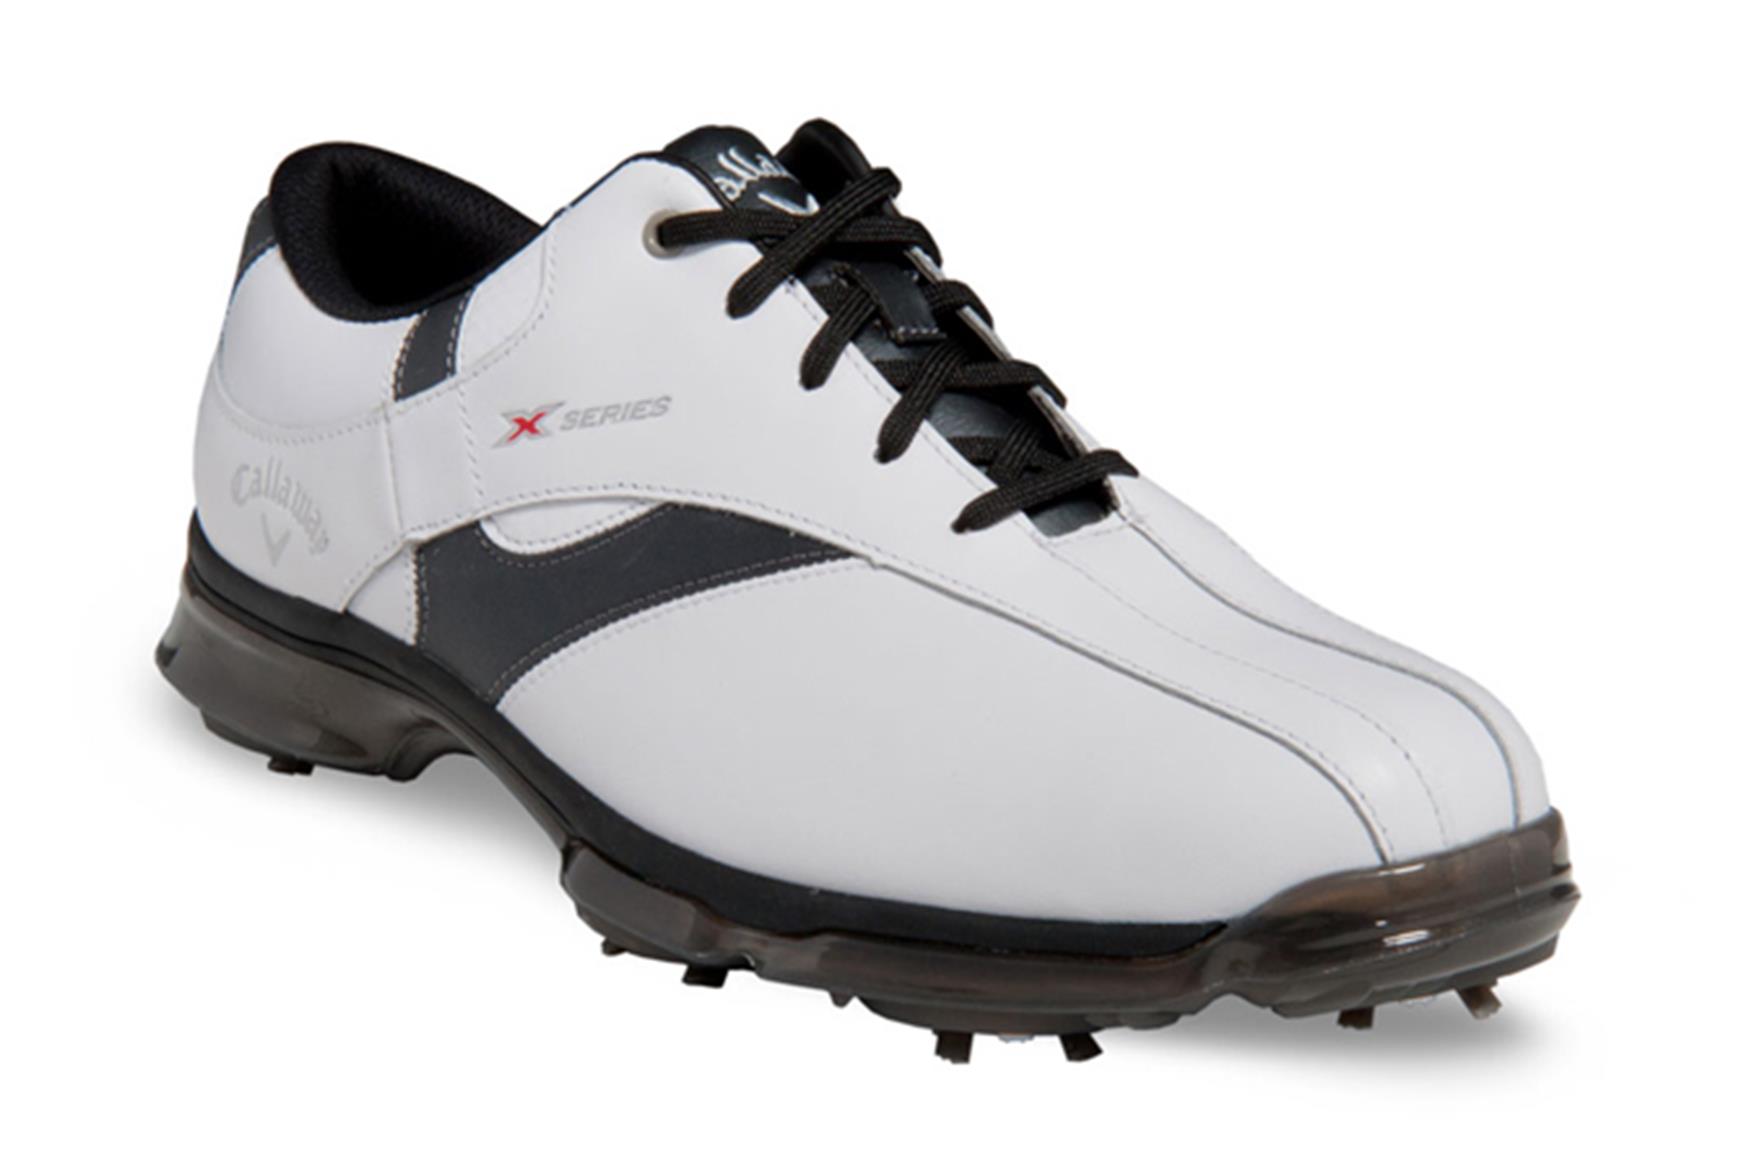 Callaway X-Series Nitro Golf Shoes 